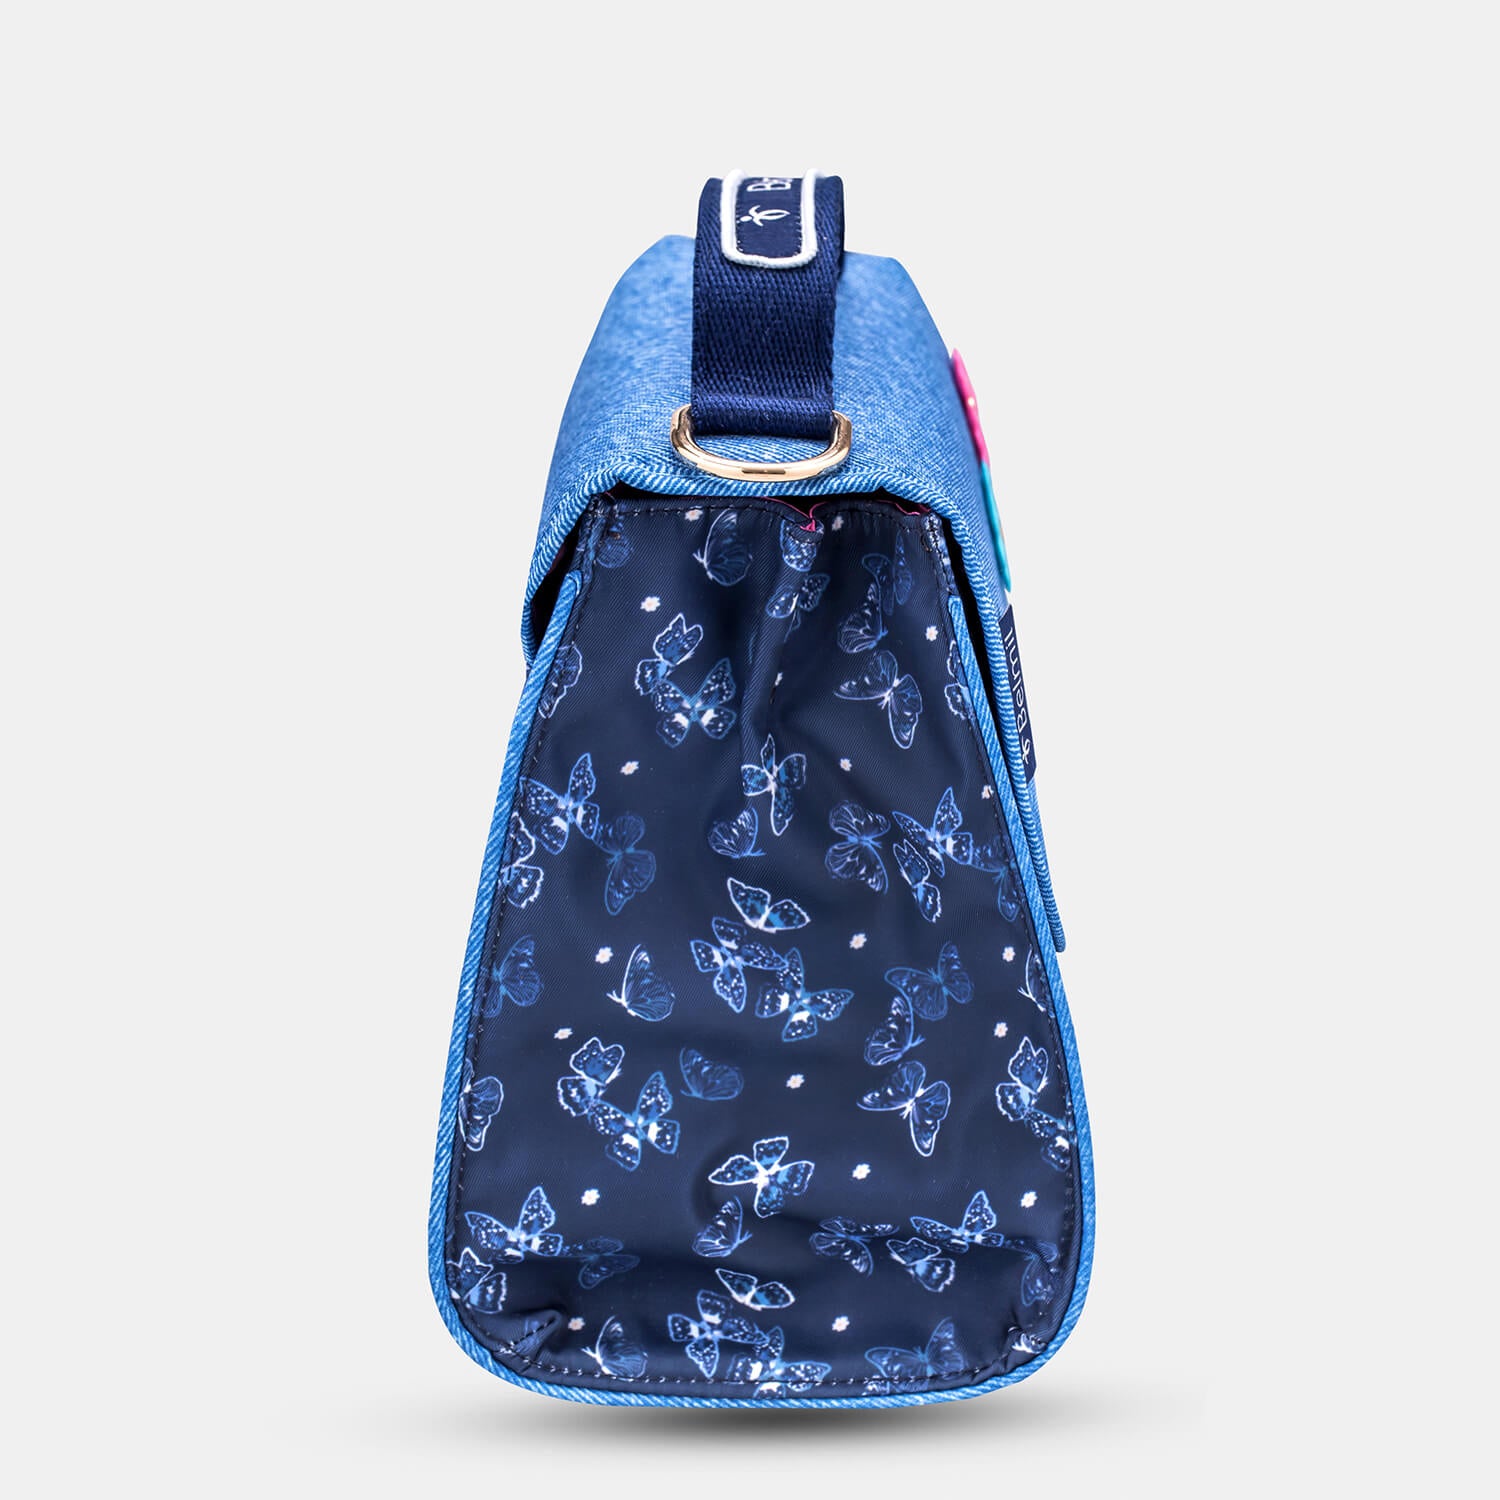 Petite Premium Shoulder bag Sapphire